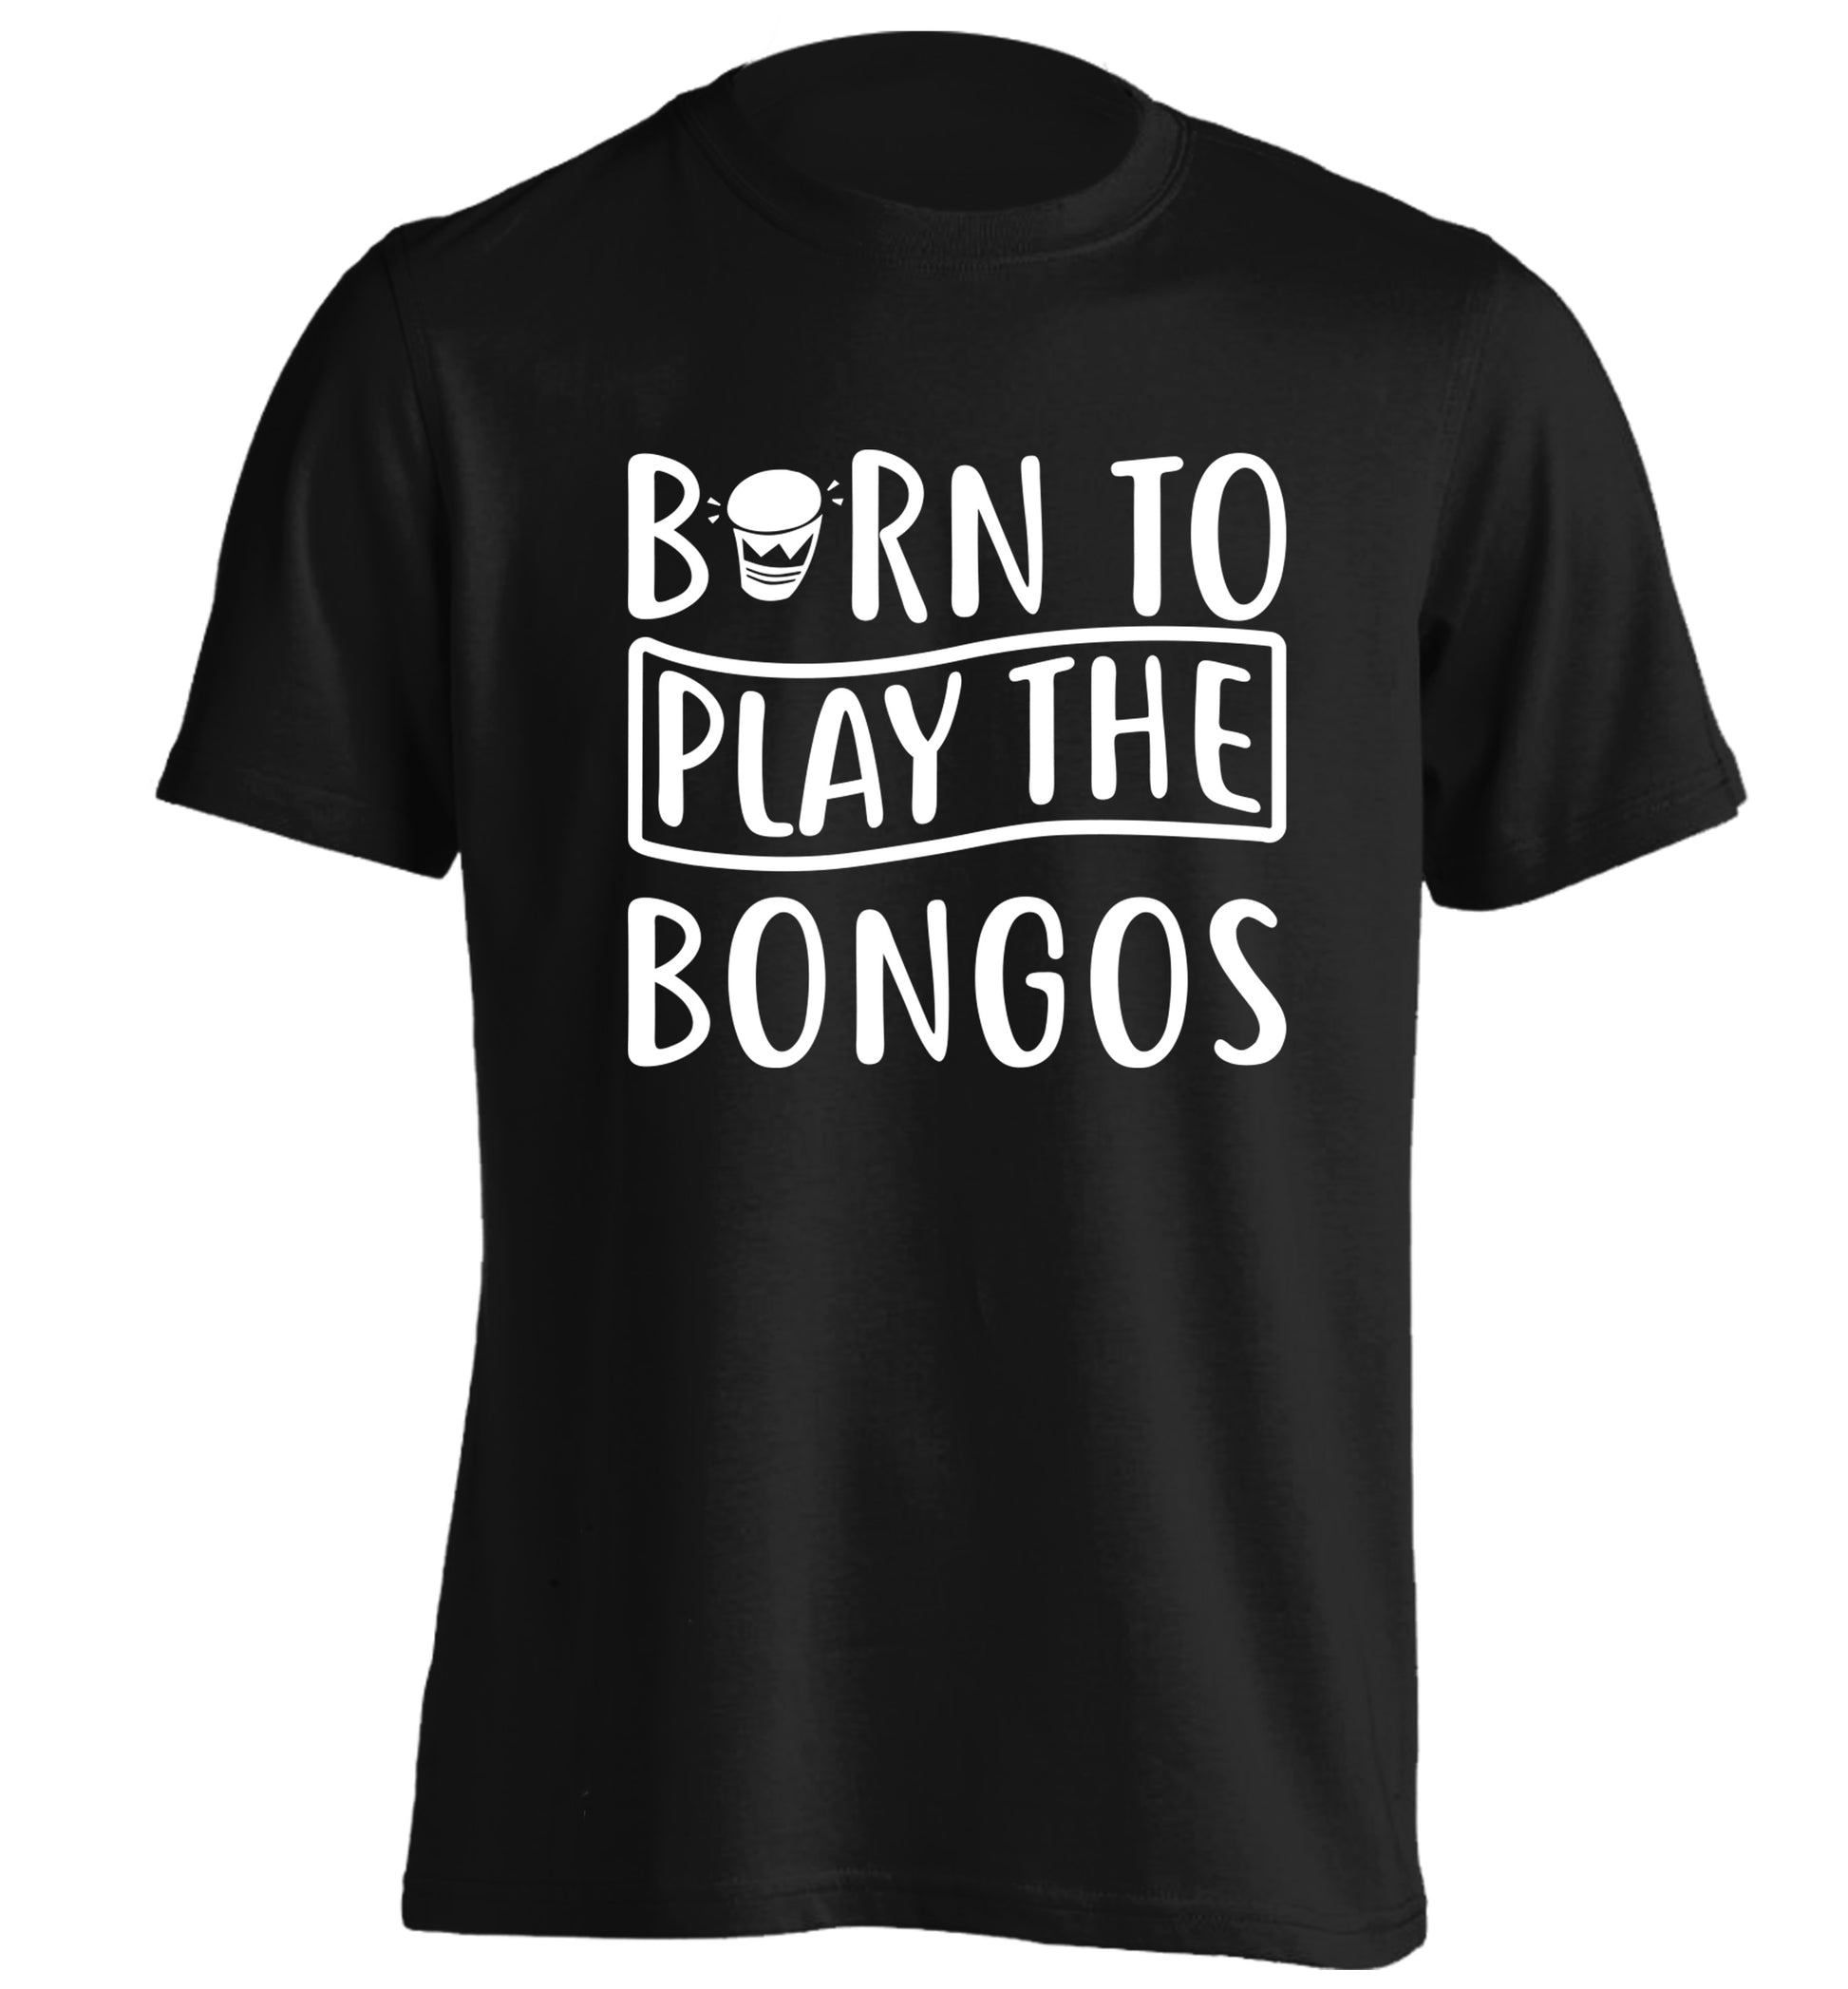 Born to play the bongos adults unisex black Tshirt 2XL